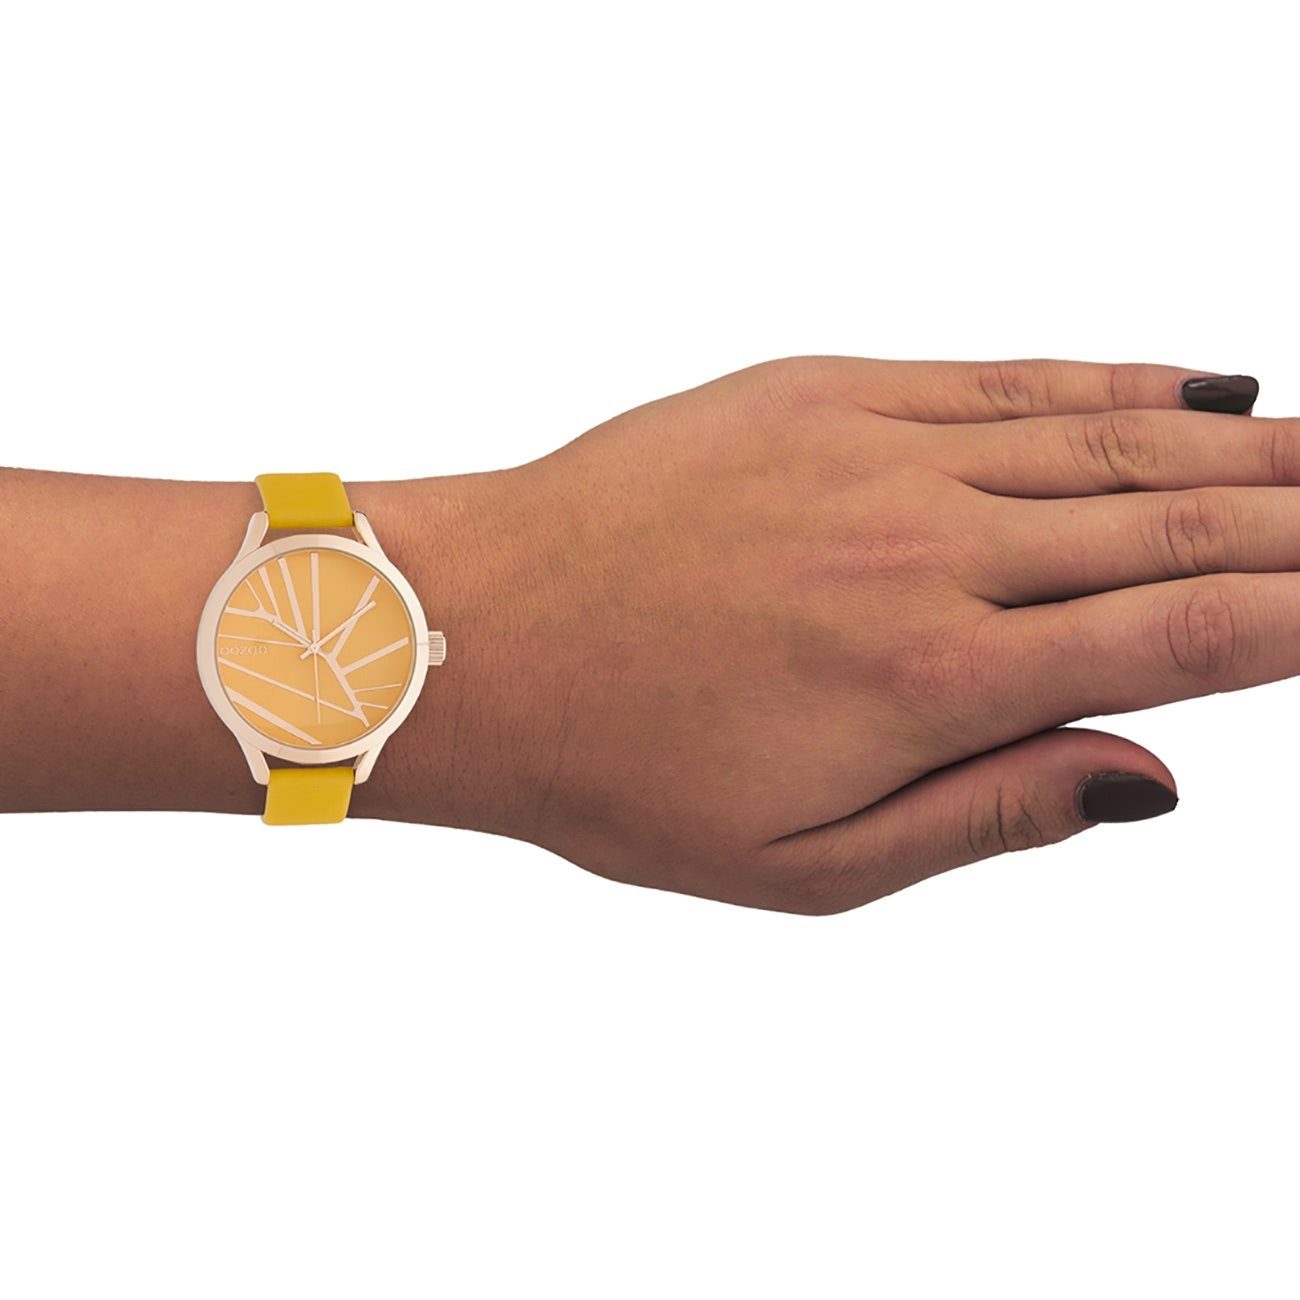 Quarzuhr OOZOO Fashion OOZOO groß (ca. gelb, 43mm), Timepieces, rund, Damen Armbanduhr Damenuhr Lederarmband Oozoo